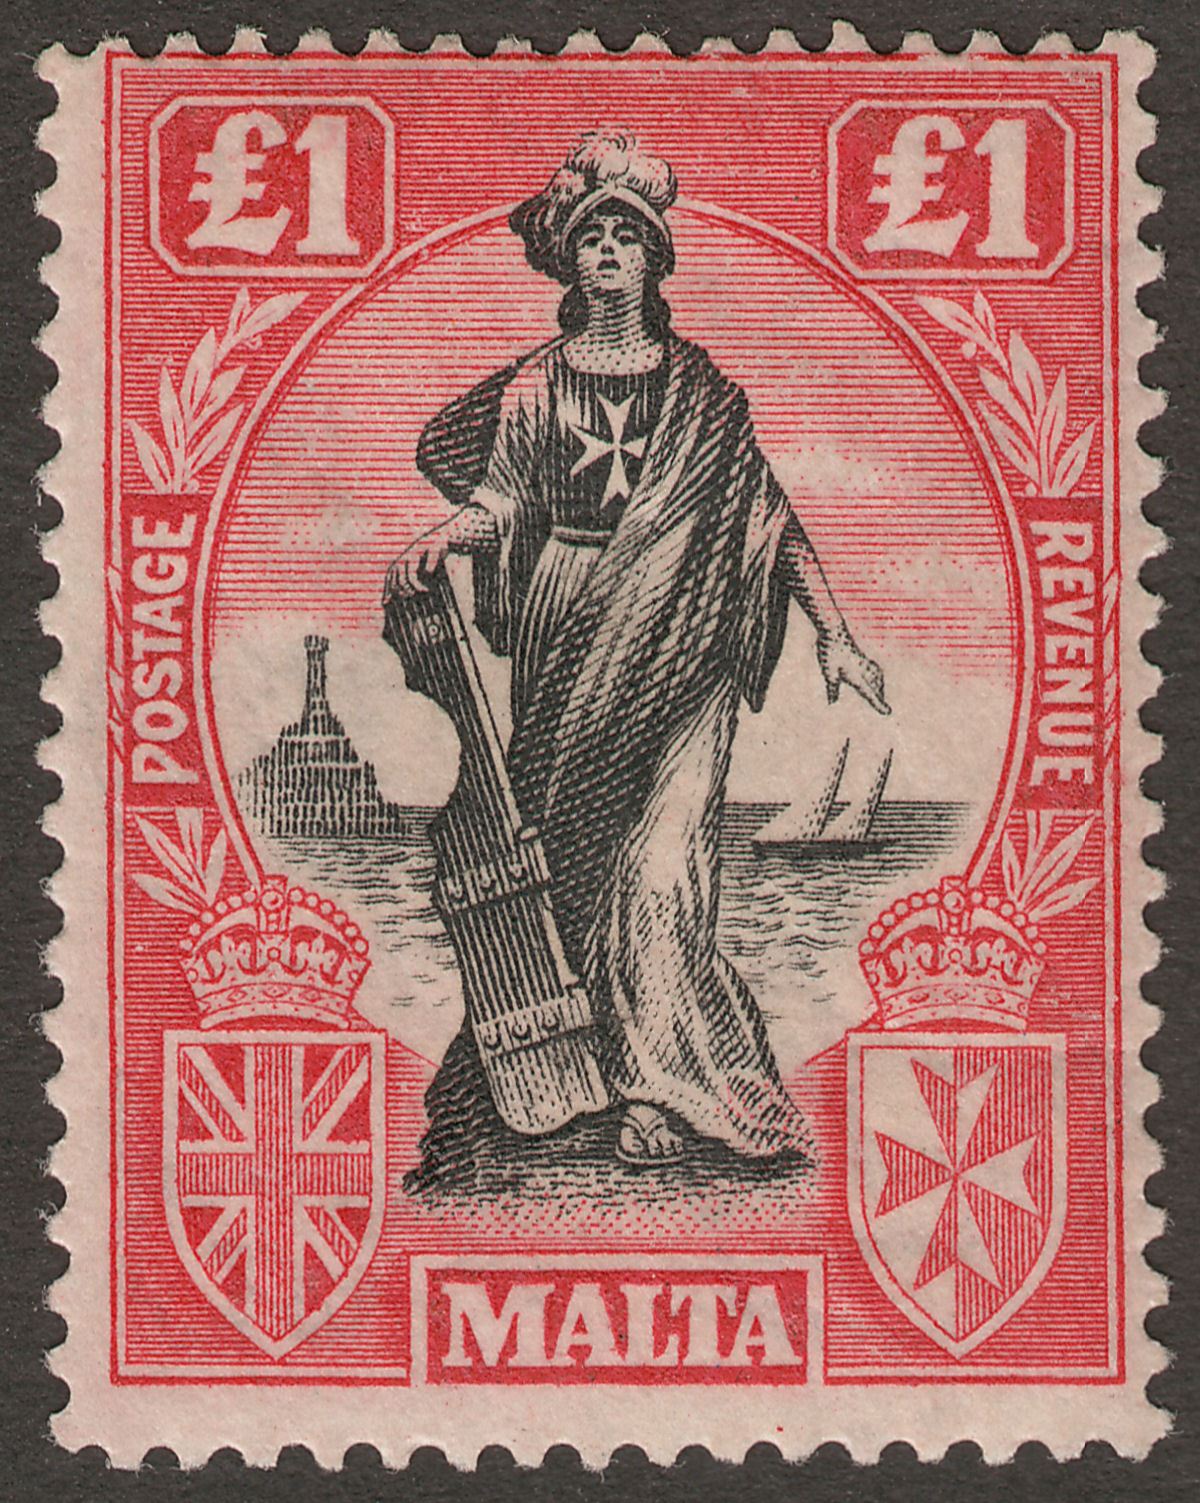 Malta 1925 KGV Figure £1 Black + Bright Carmine wmk Upright Mint SG140 cat £110